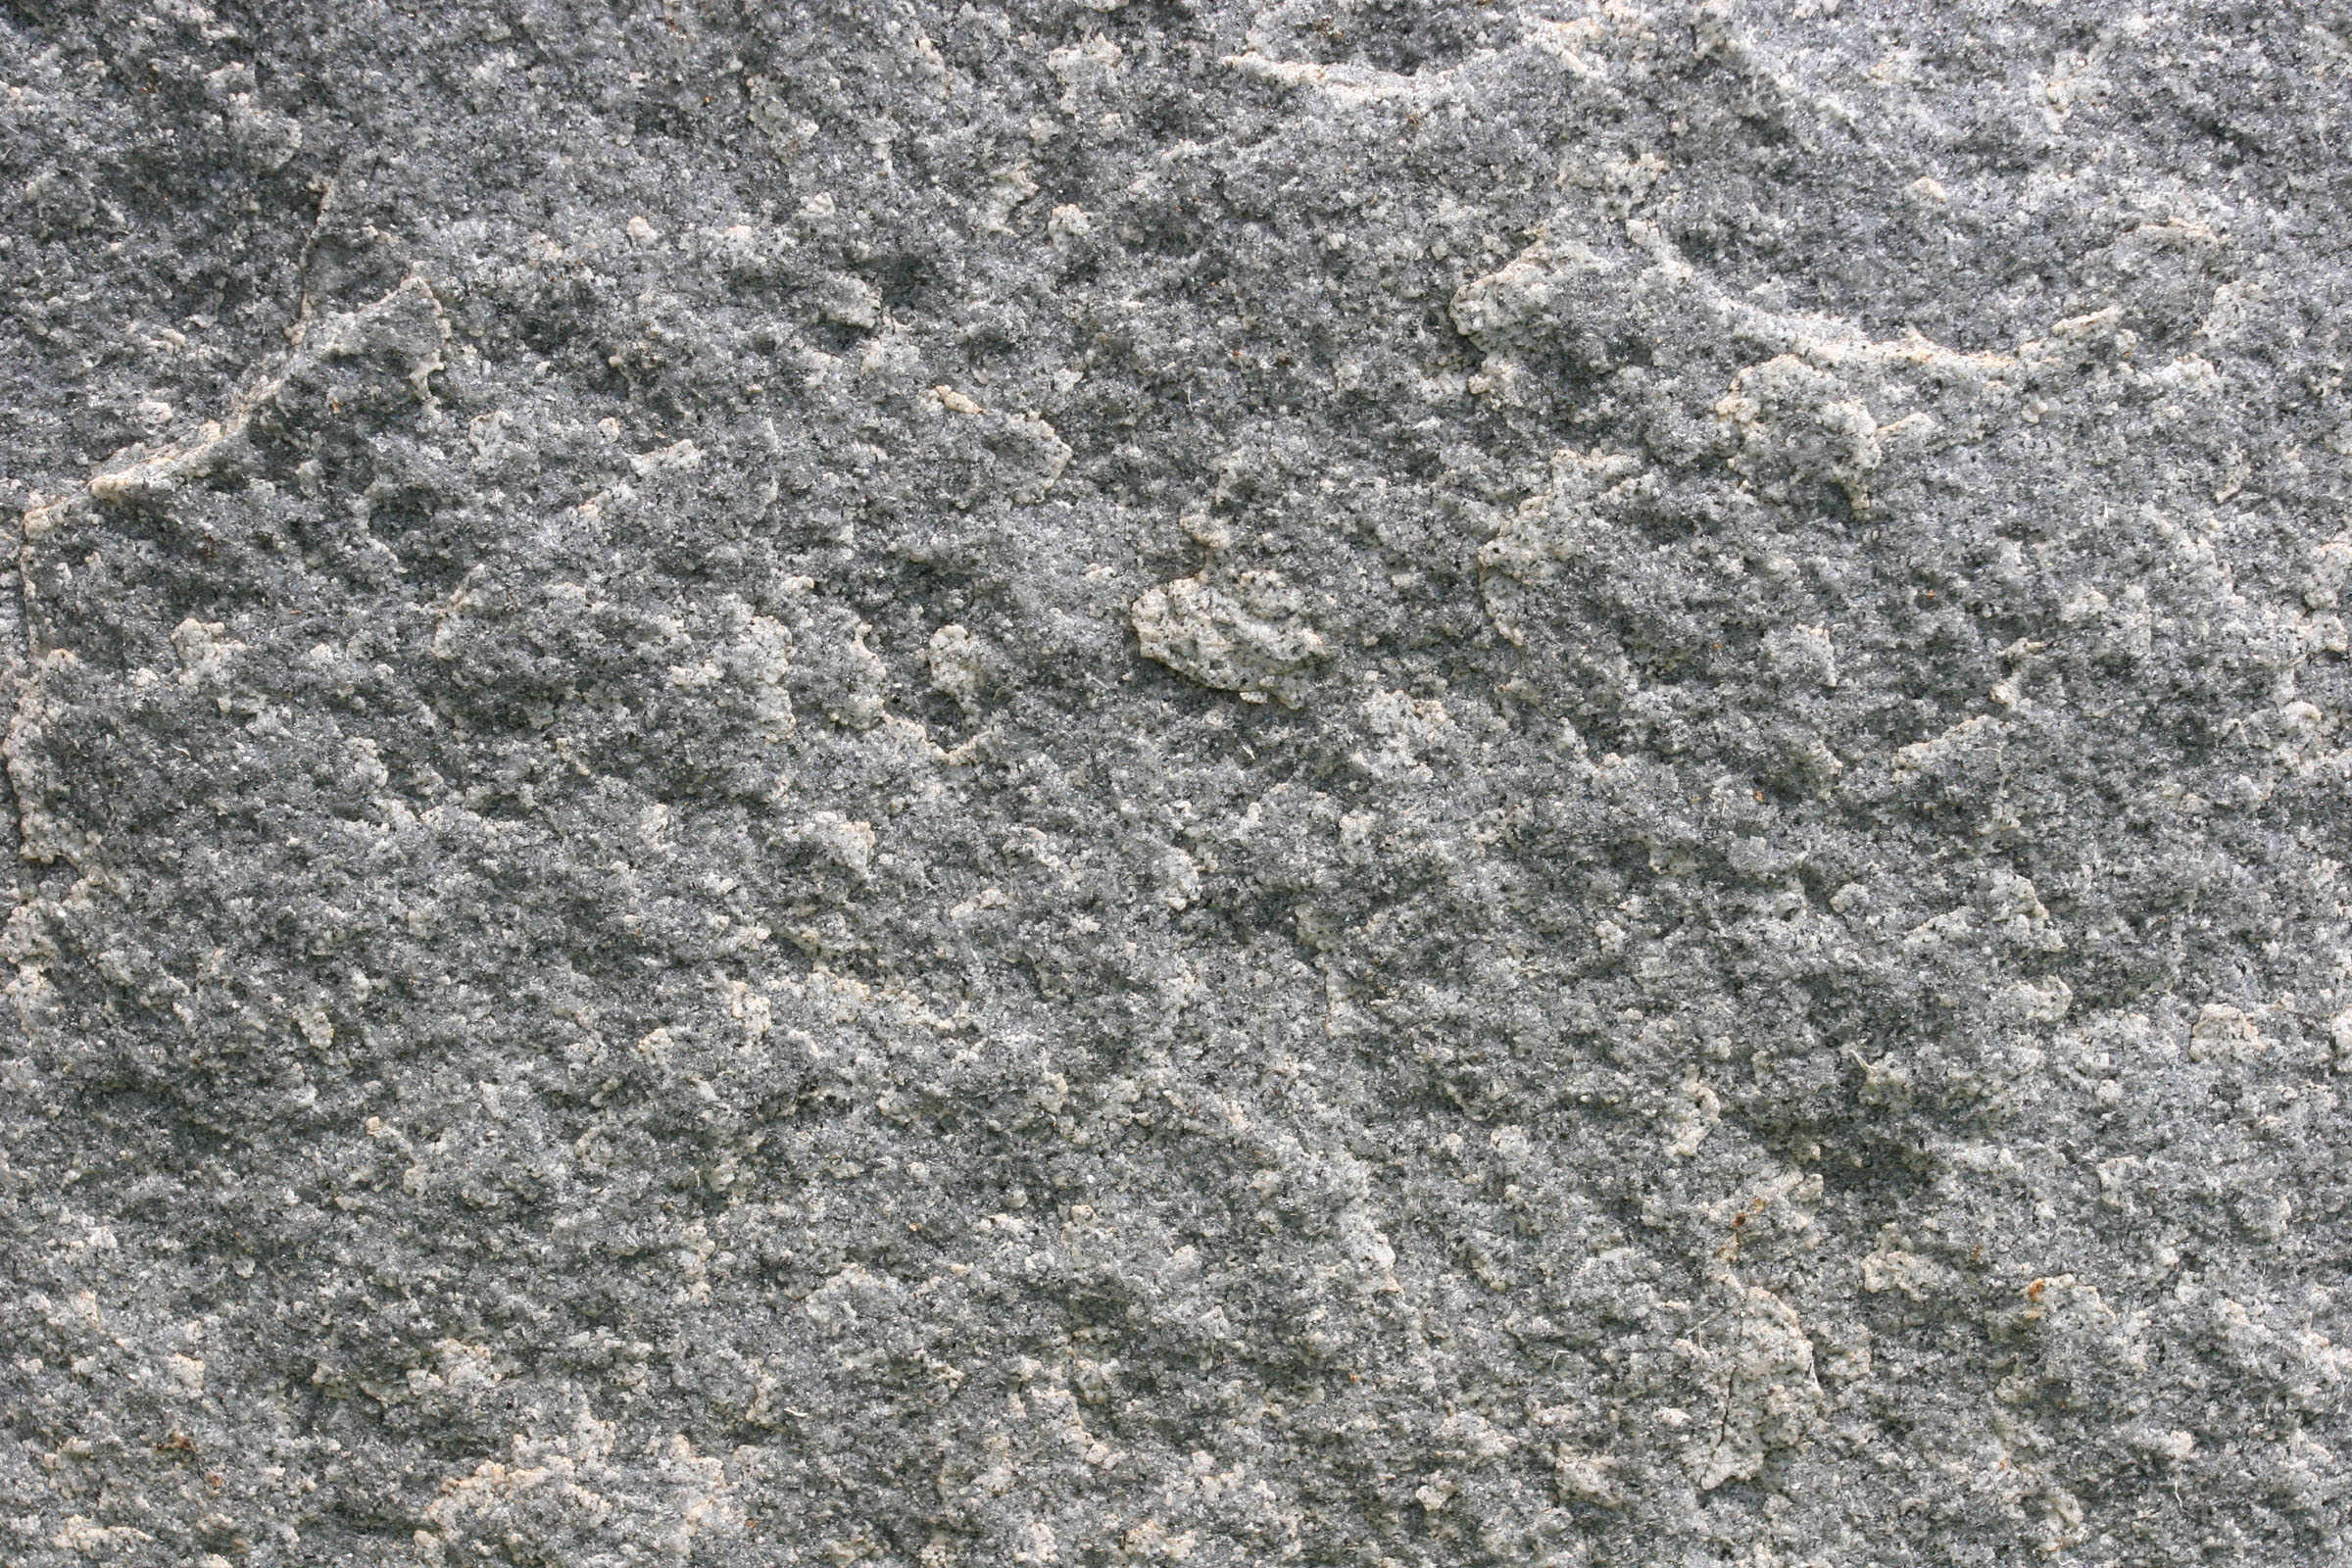 Black Stone Texture Wallpaper Image Gallery